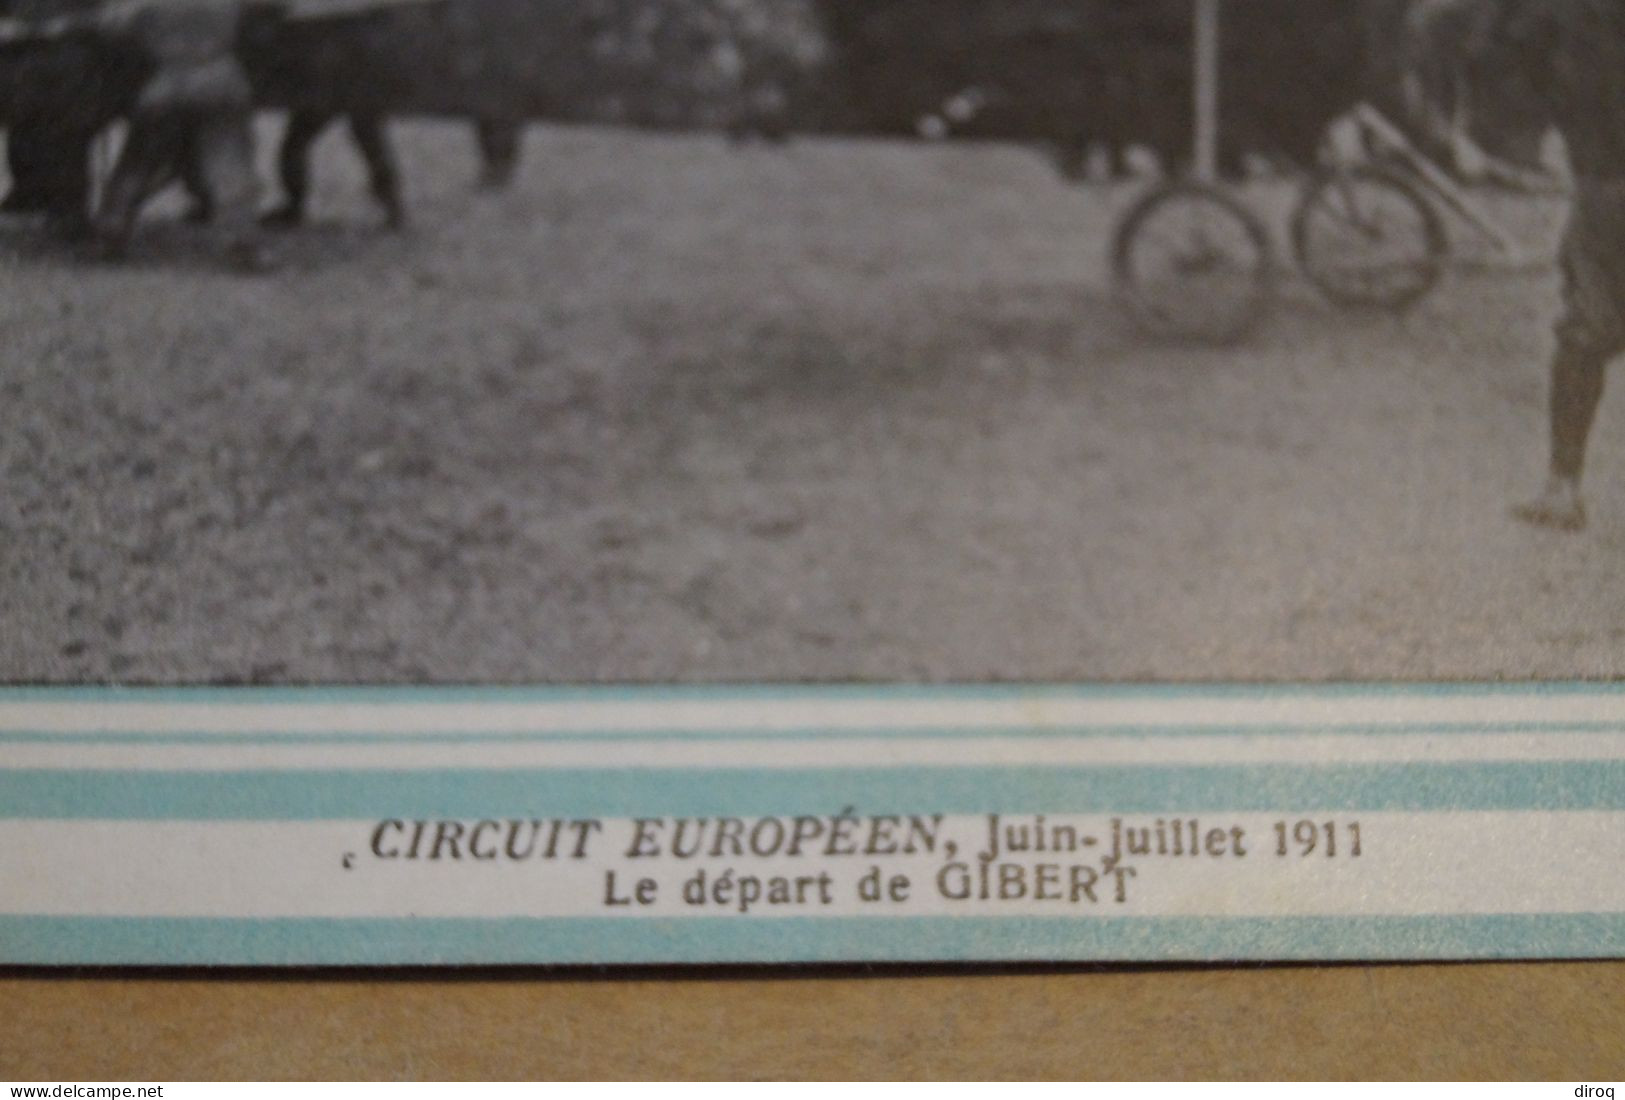 CIRCUIT EUROPEEN DE JUIN - JUILLET 1911,monoplan Rep,belle Carte Ancienne - Riunioni